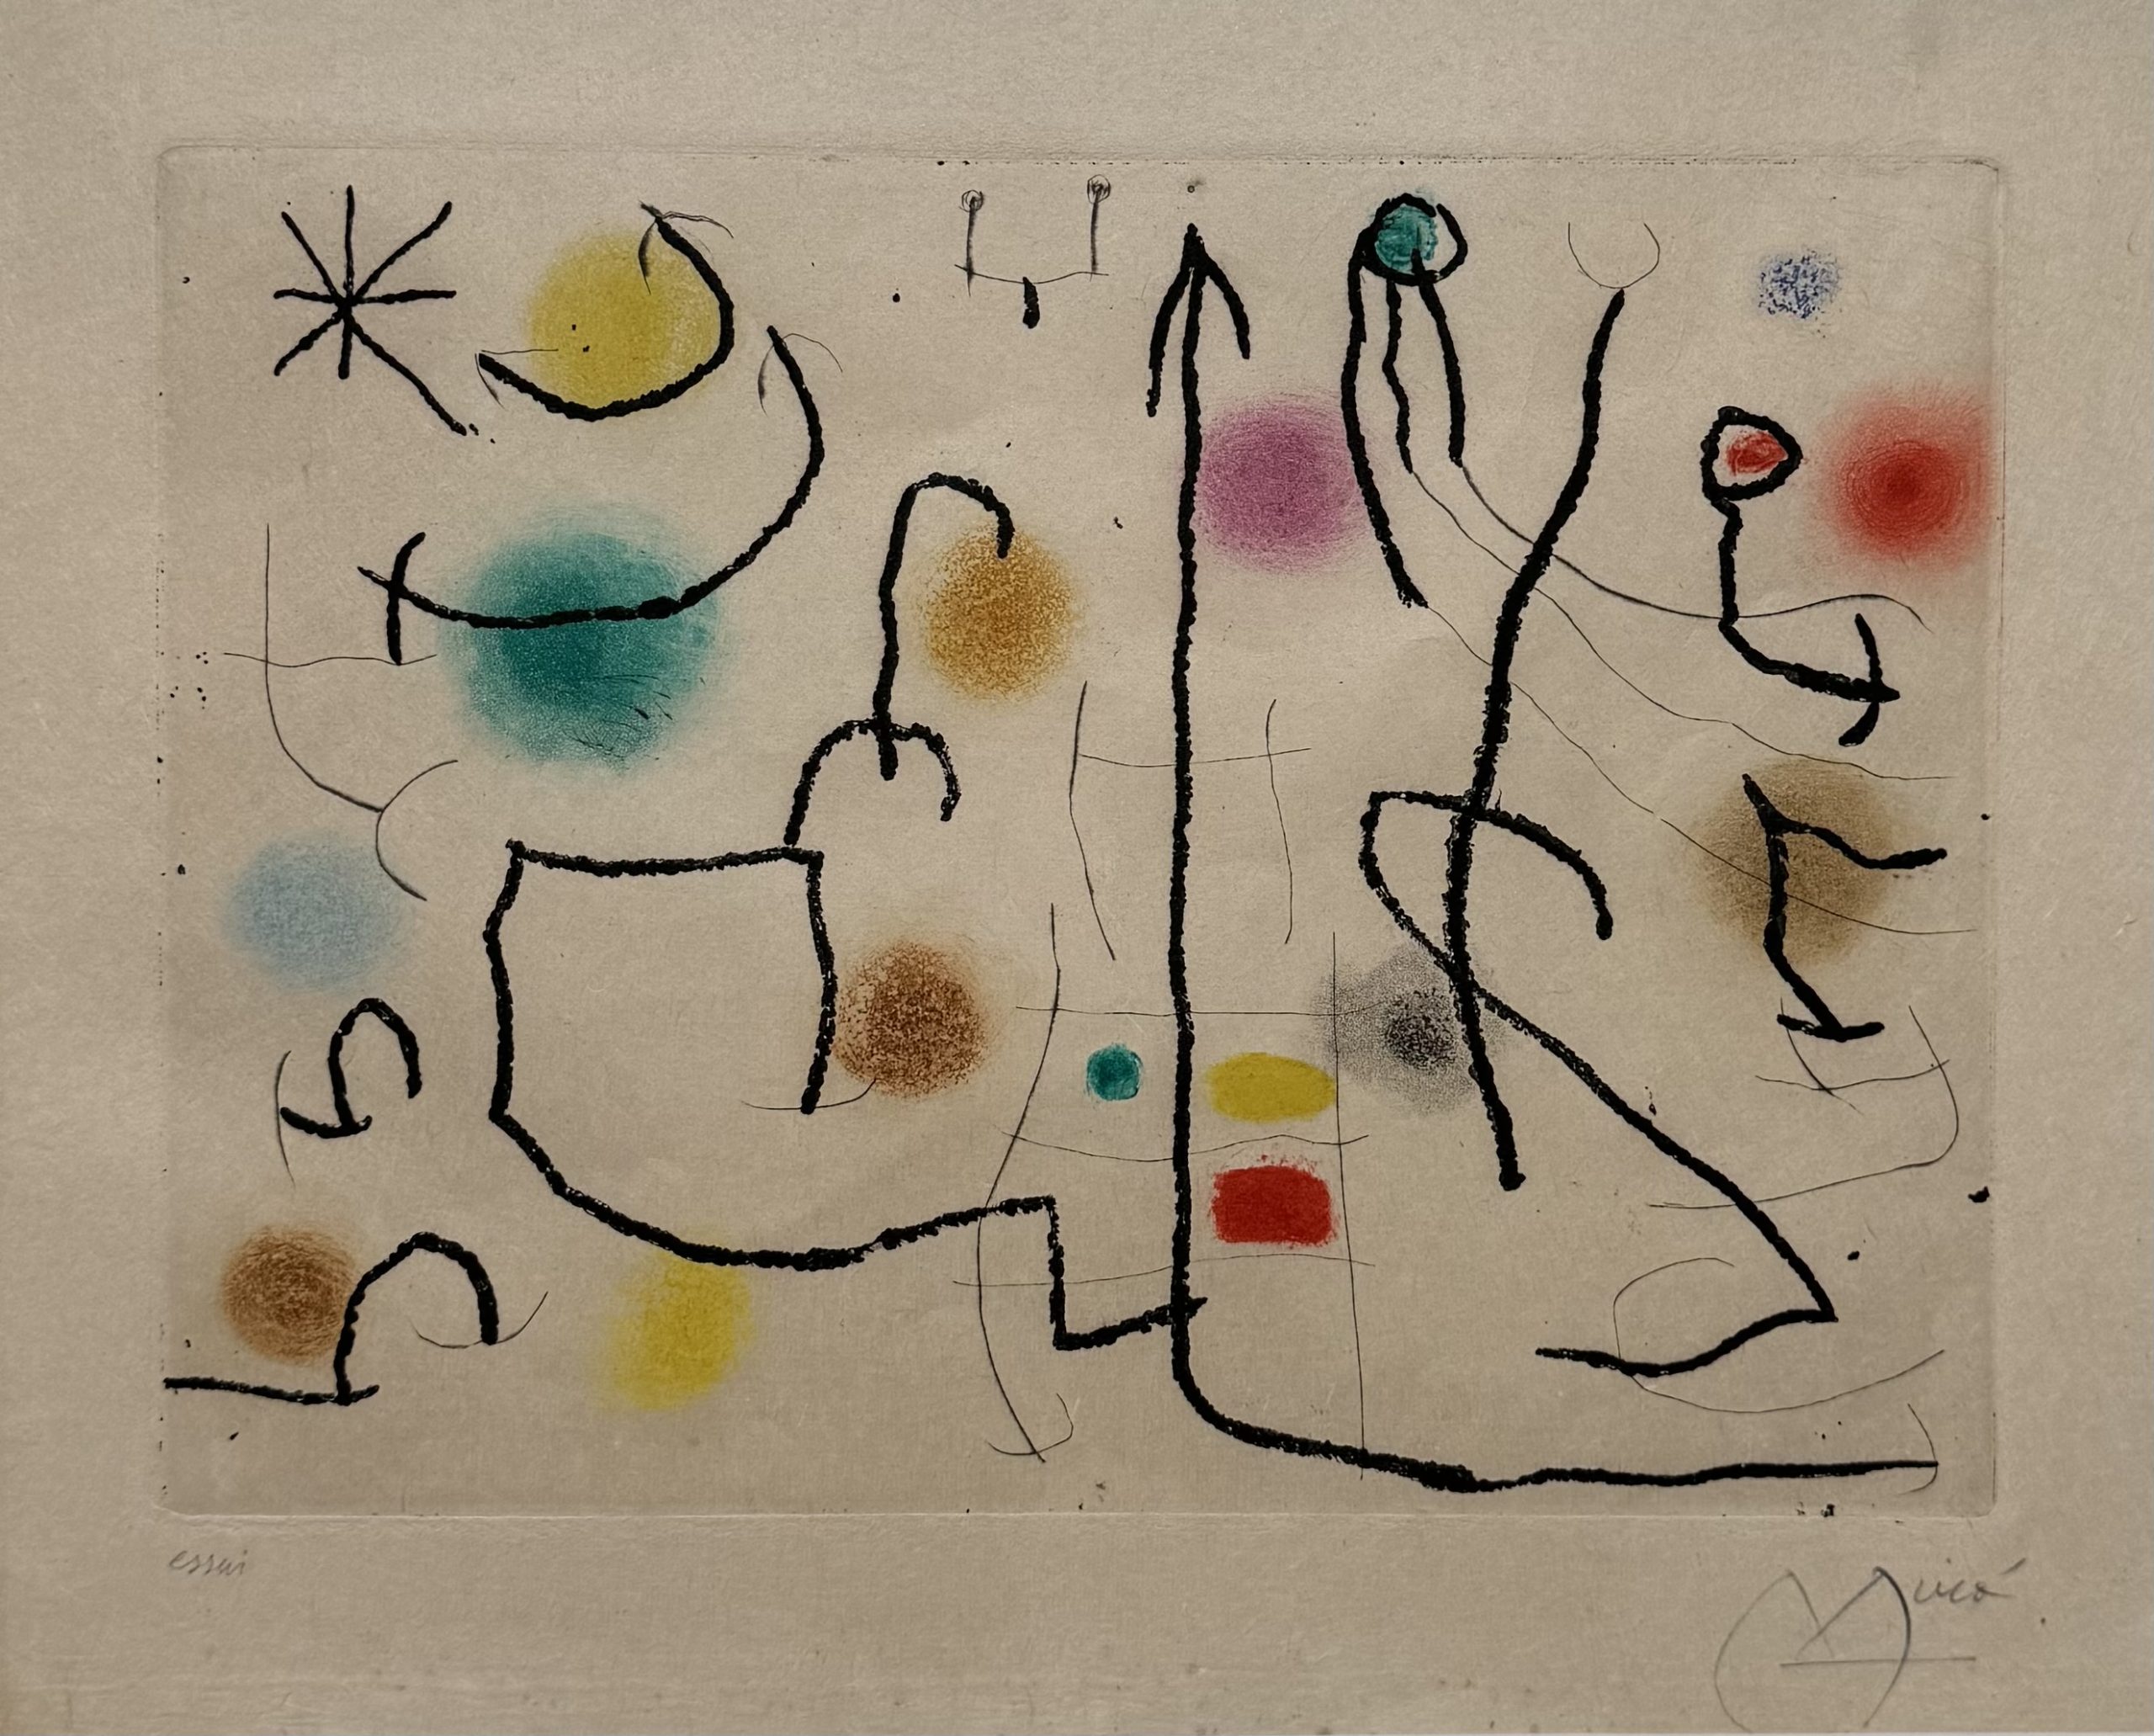 Etching by Joan Miro